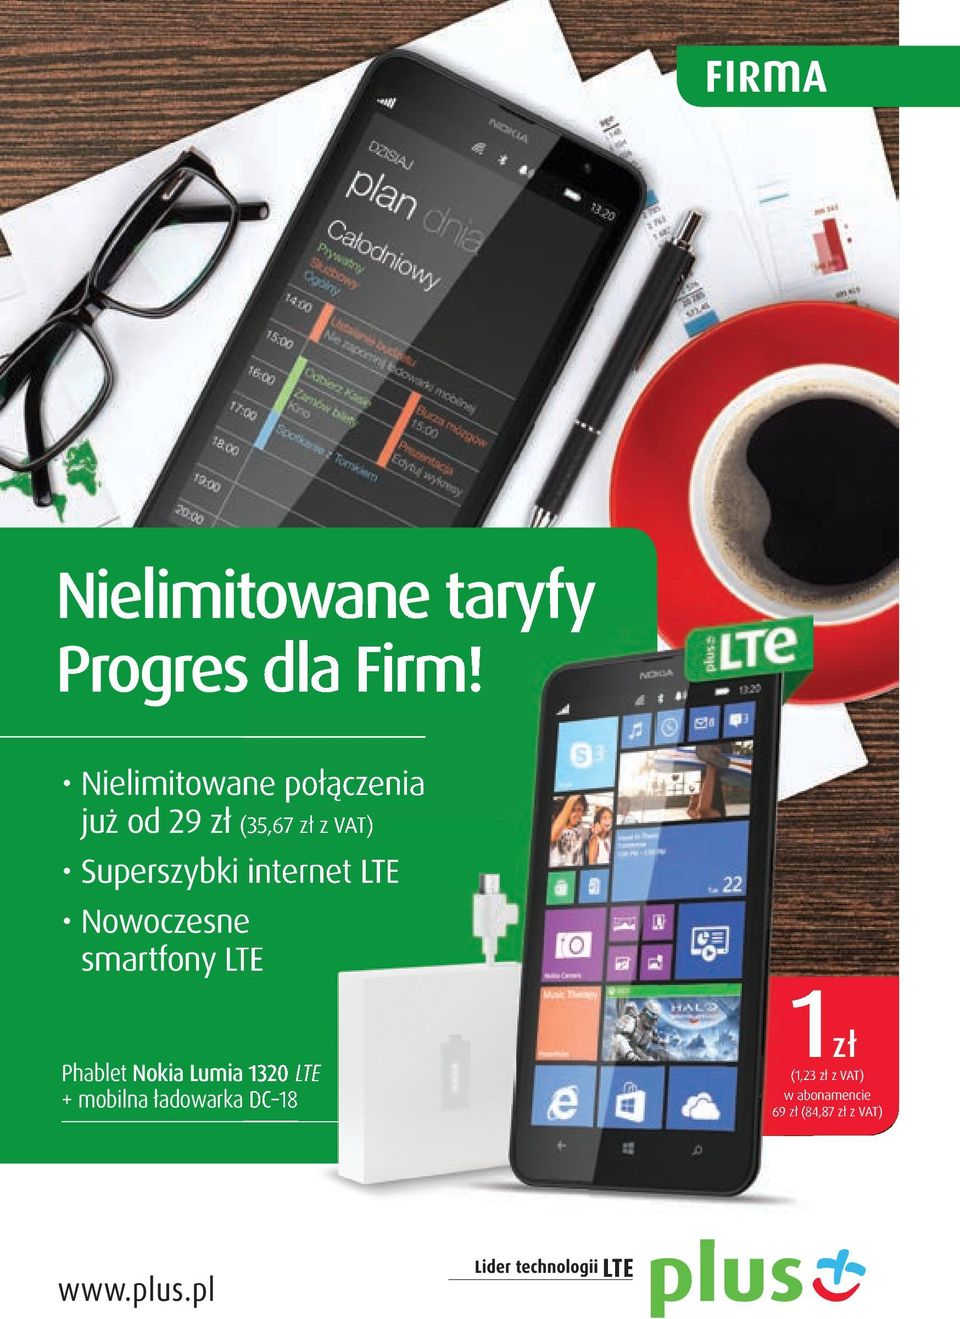 Superszybki internet LTE Nowoczesne smartfony LTE Phablet Nokia